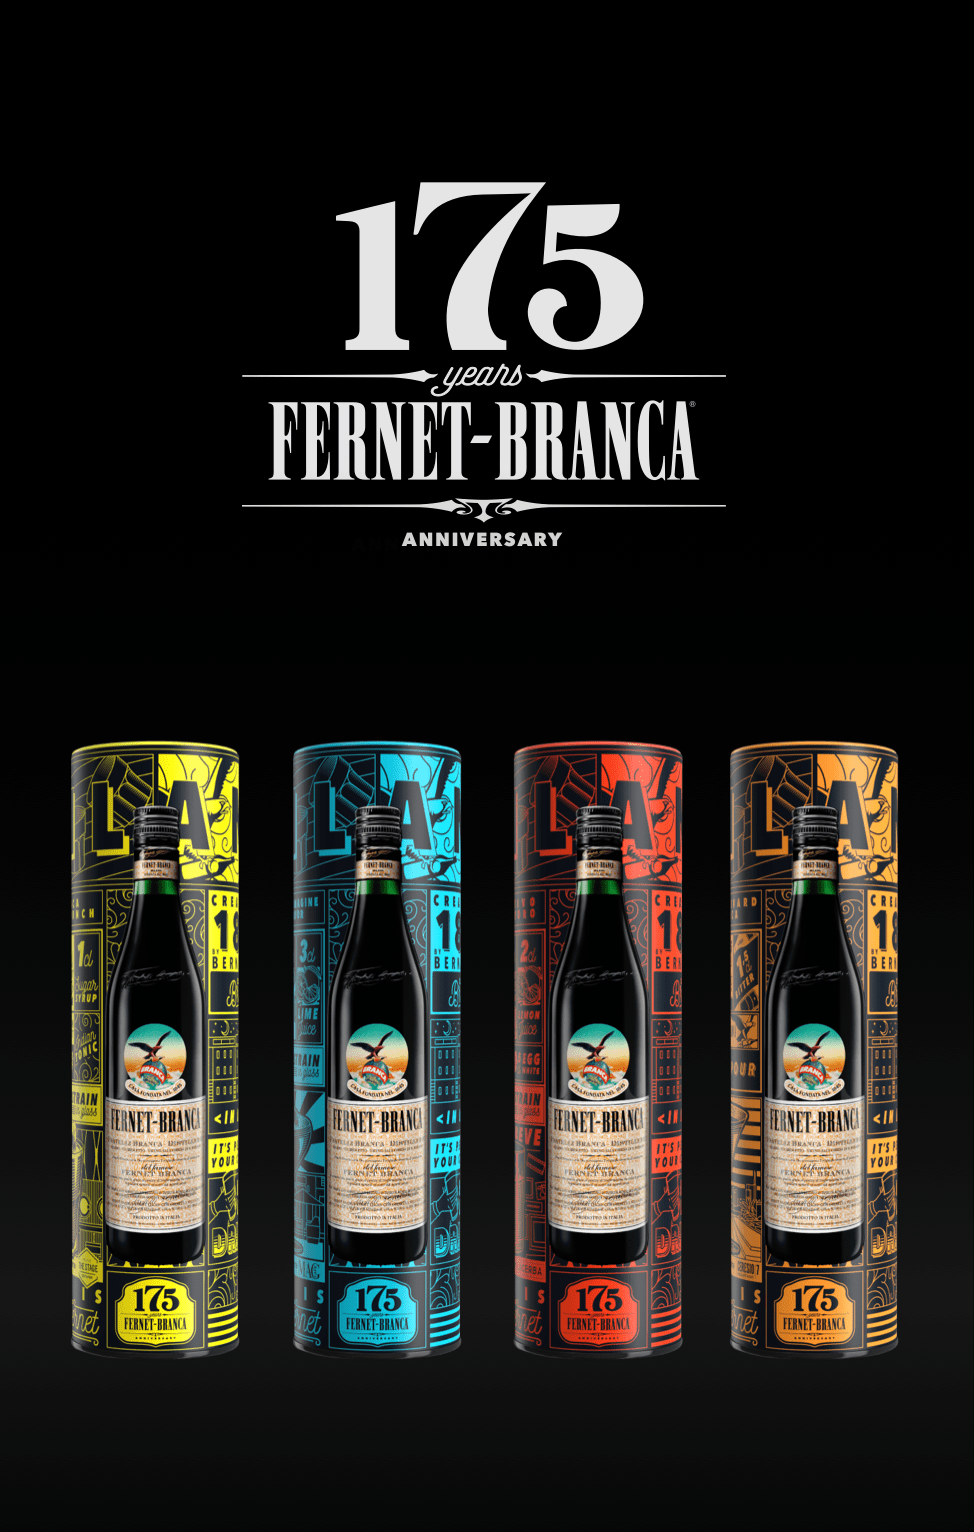 Fernet-Branca. Inimitabile like you since 1845!